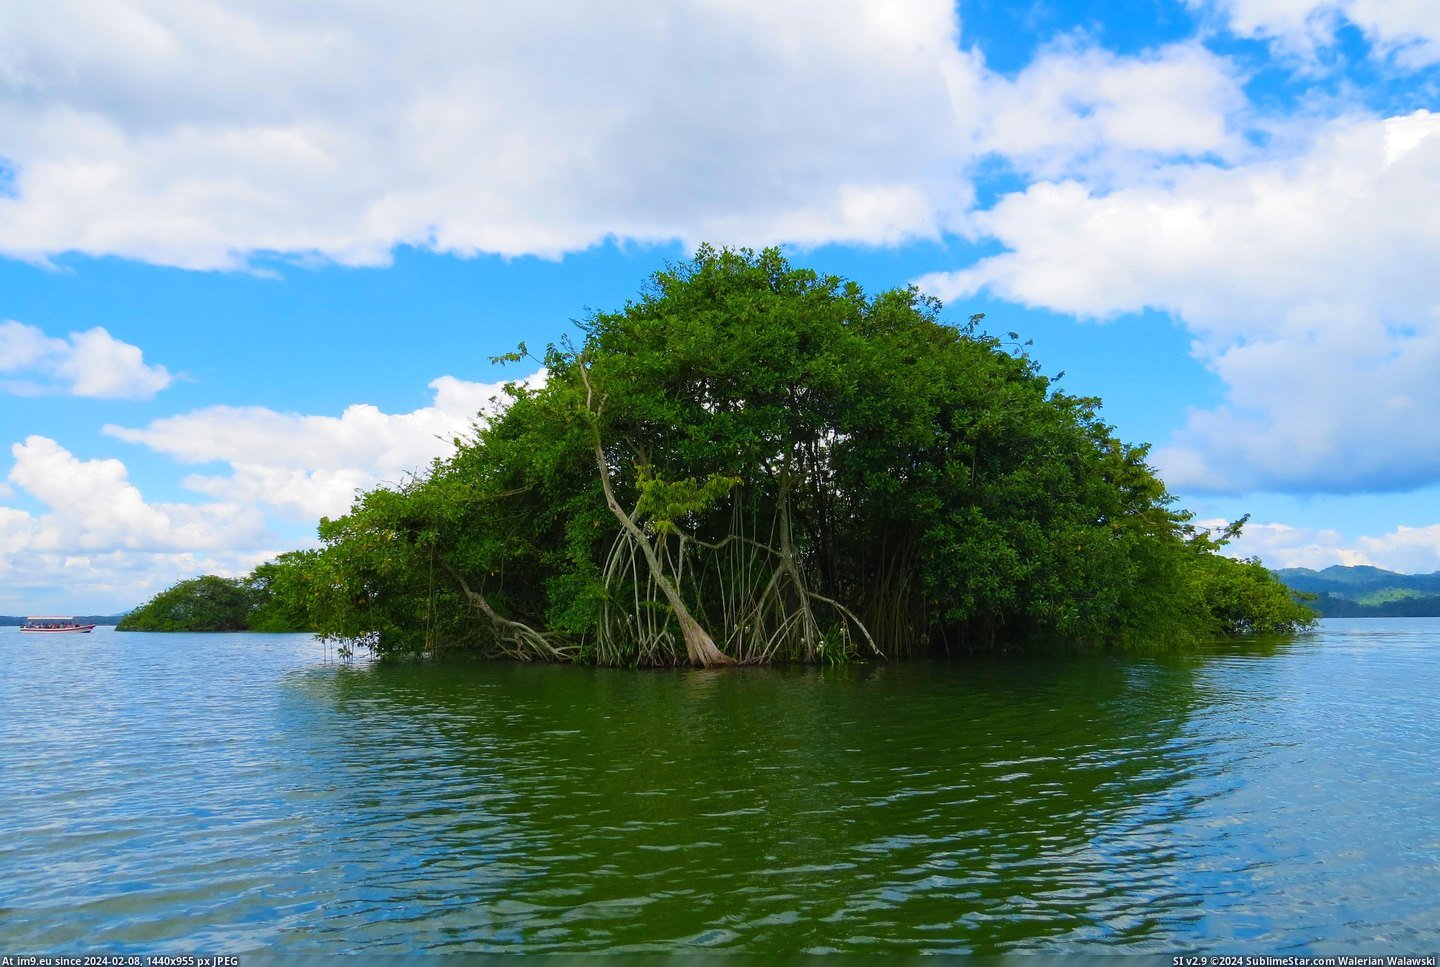 #Island #Trip #Mangrove #4000x2664 #Dulce #Rio #Guatemala [Earthporn] Mangrove Island on the Rio Dulce from my trip to Guatemala [4000x2664] Pic. (Изображение из альбом My r/EARTHPORN favs))